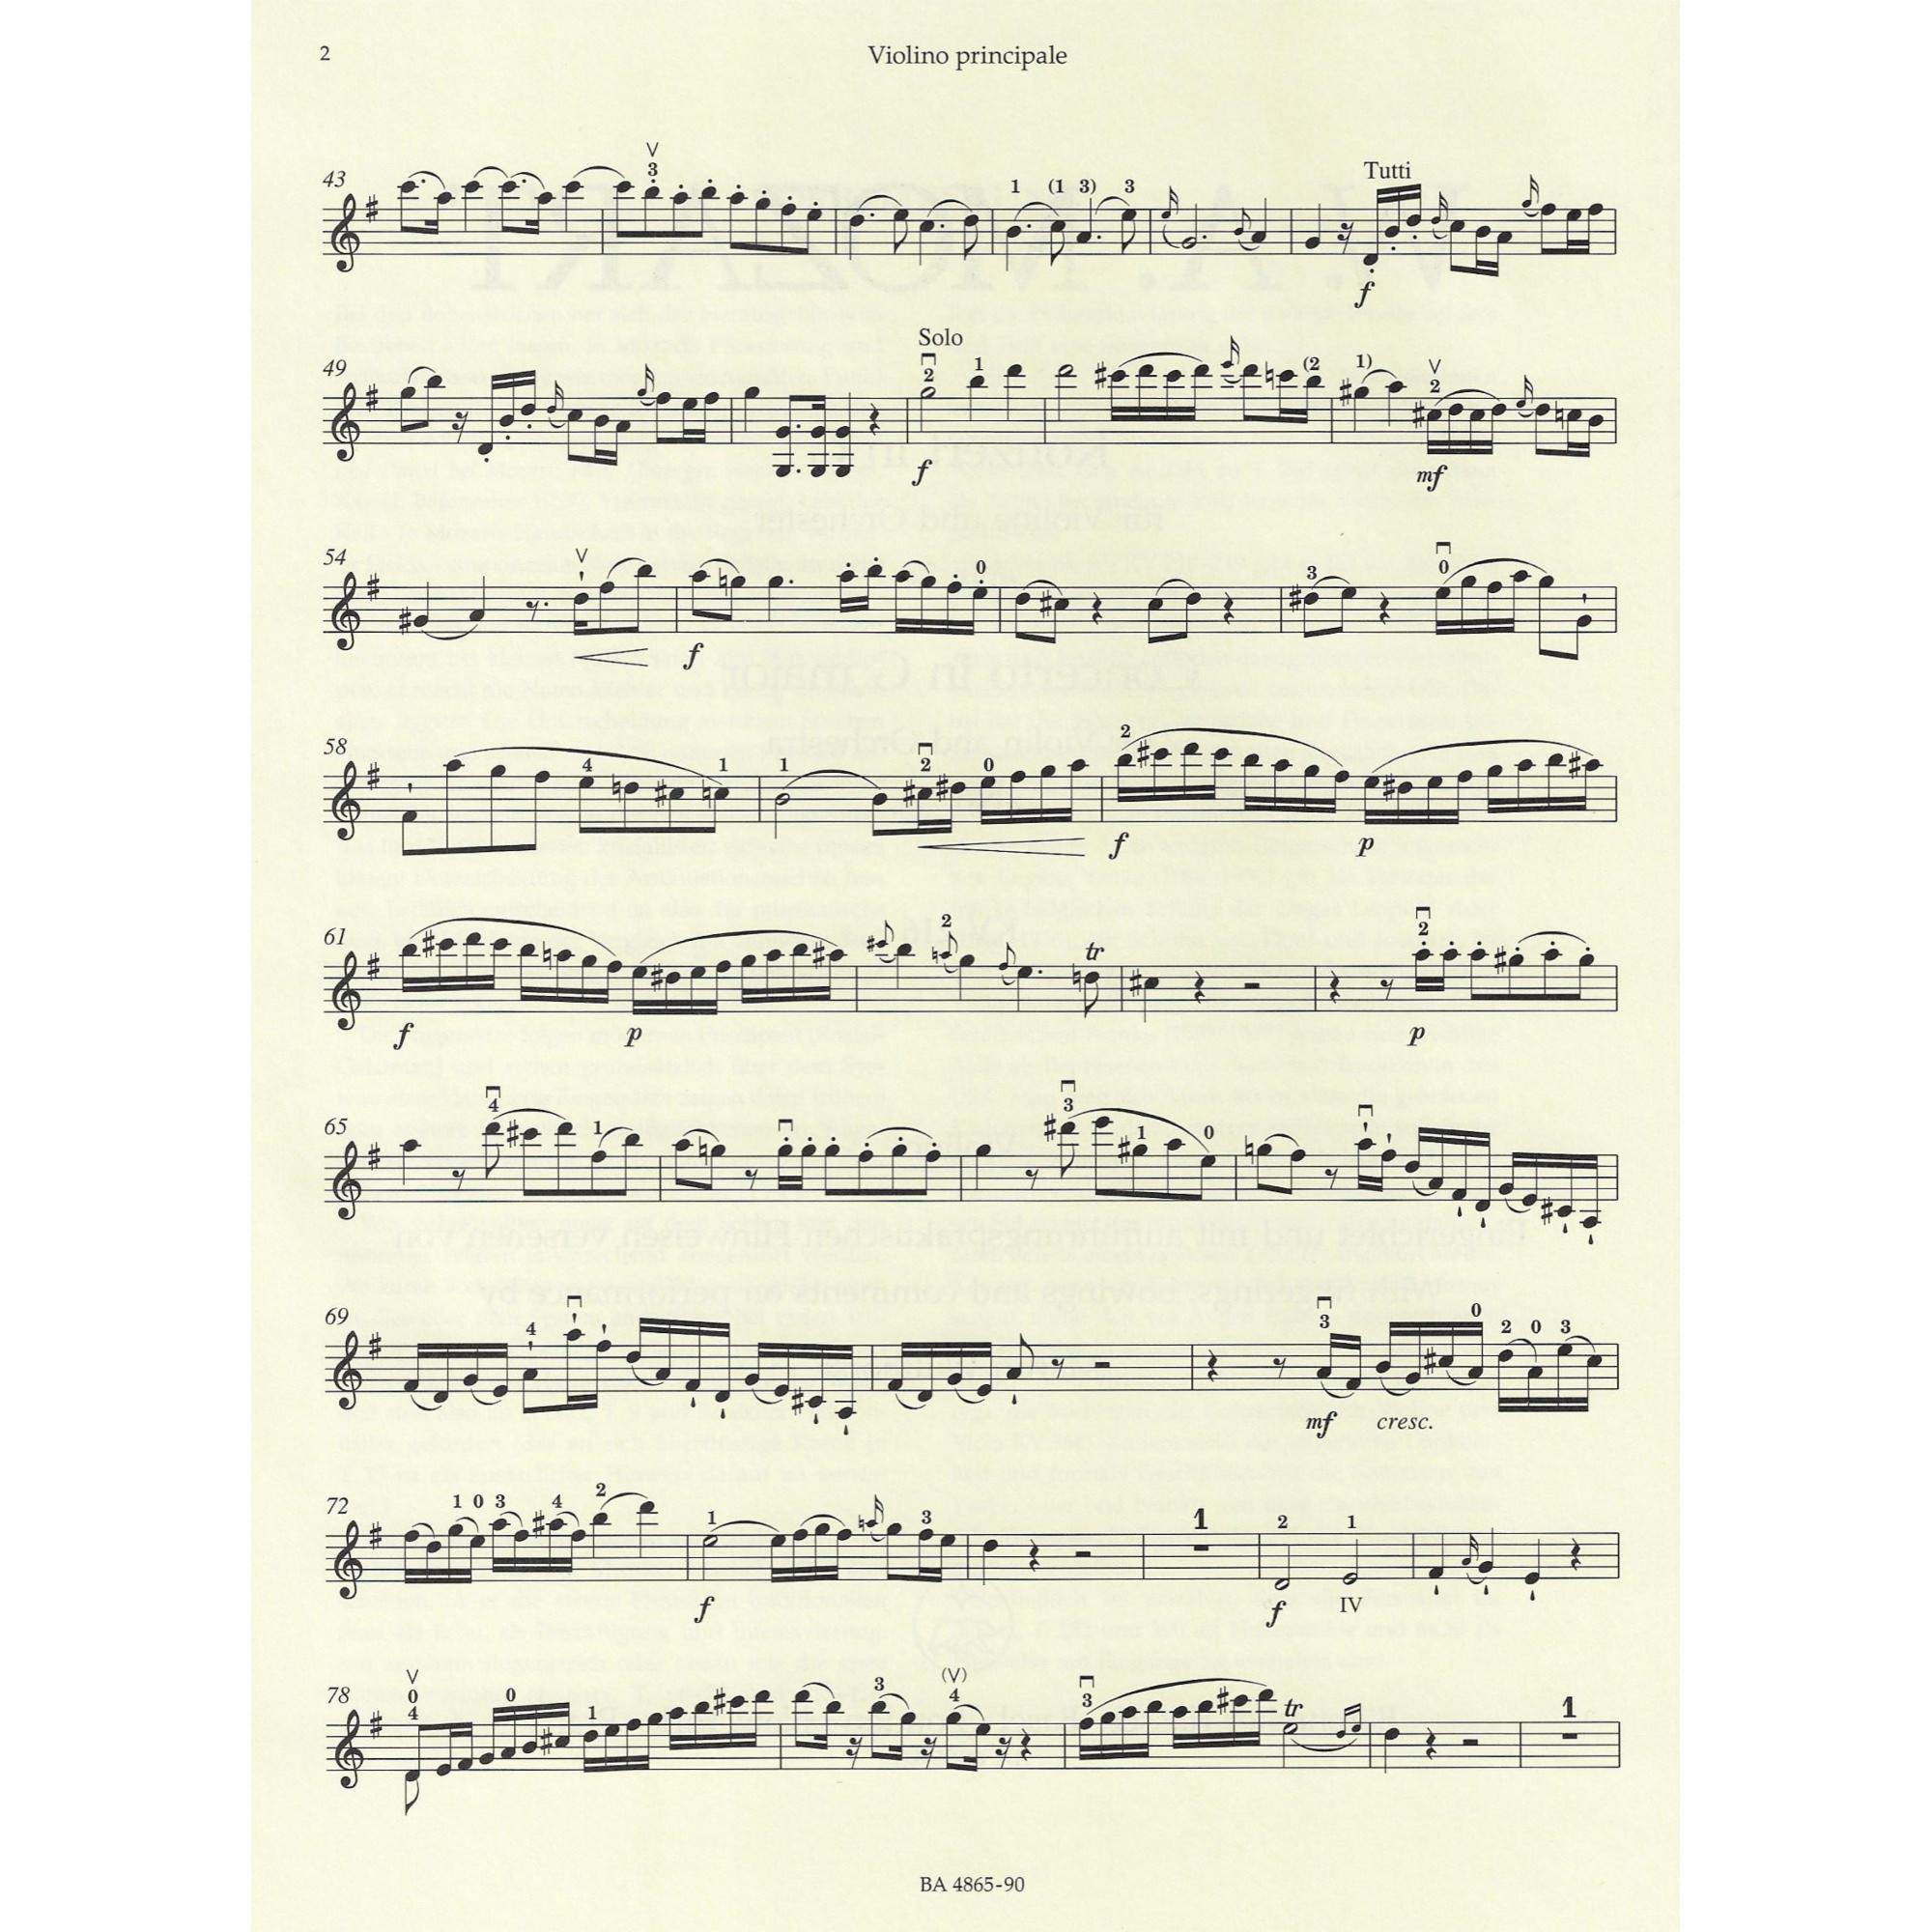 Sample: Marked Violin Part (Pg. 2)